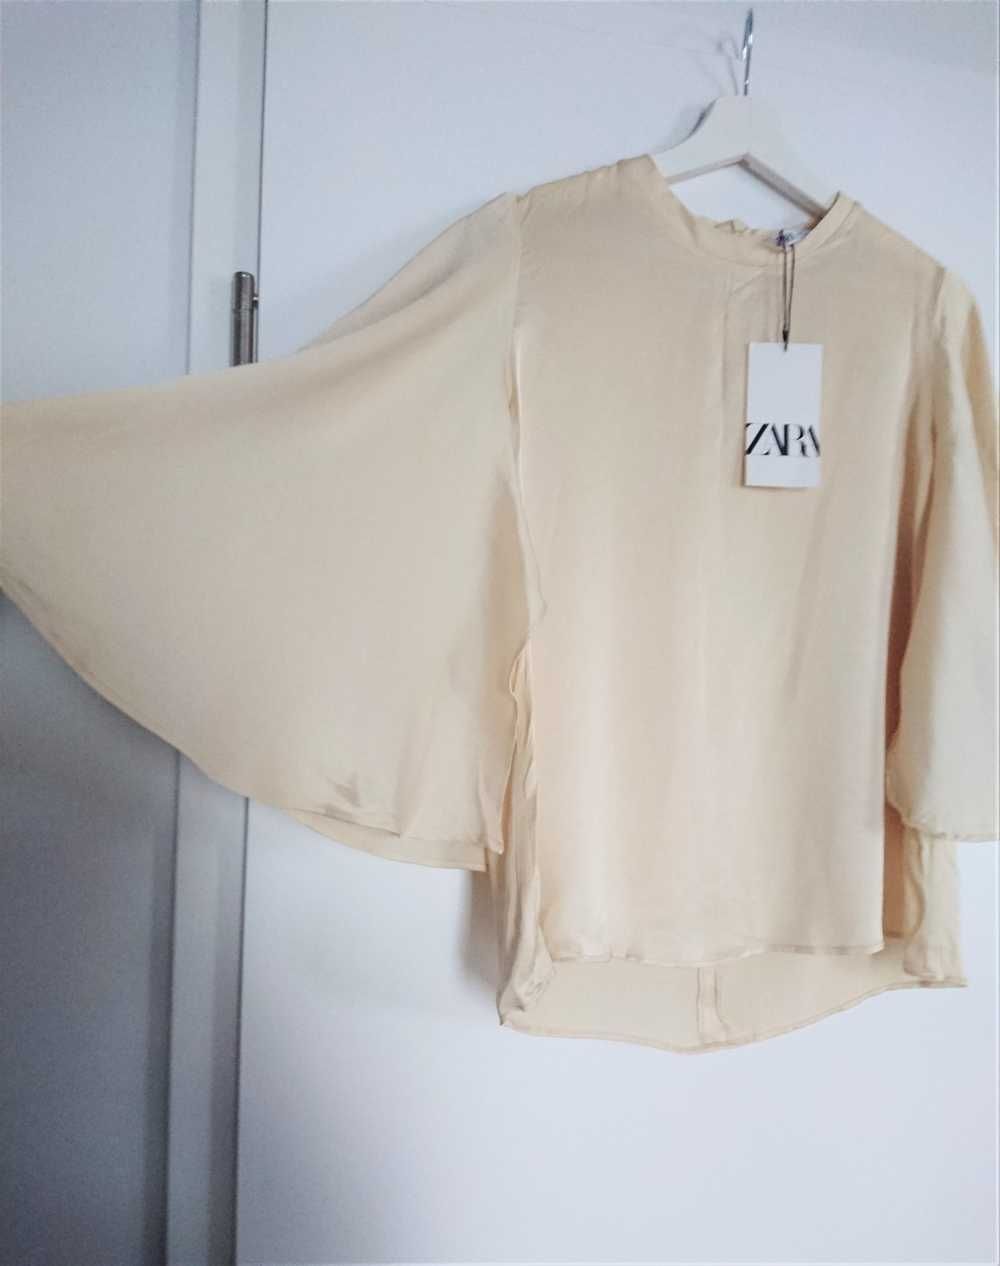 Peleryna bluzka Zara 38 M